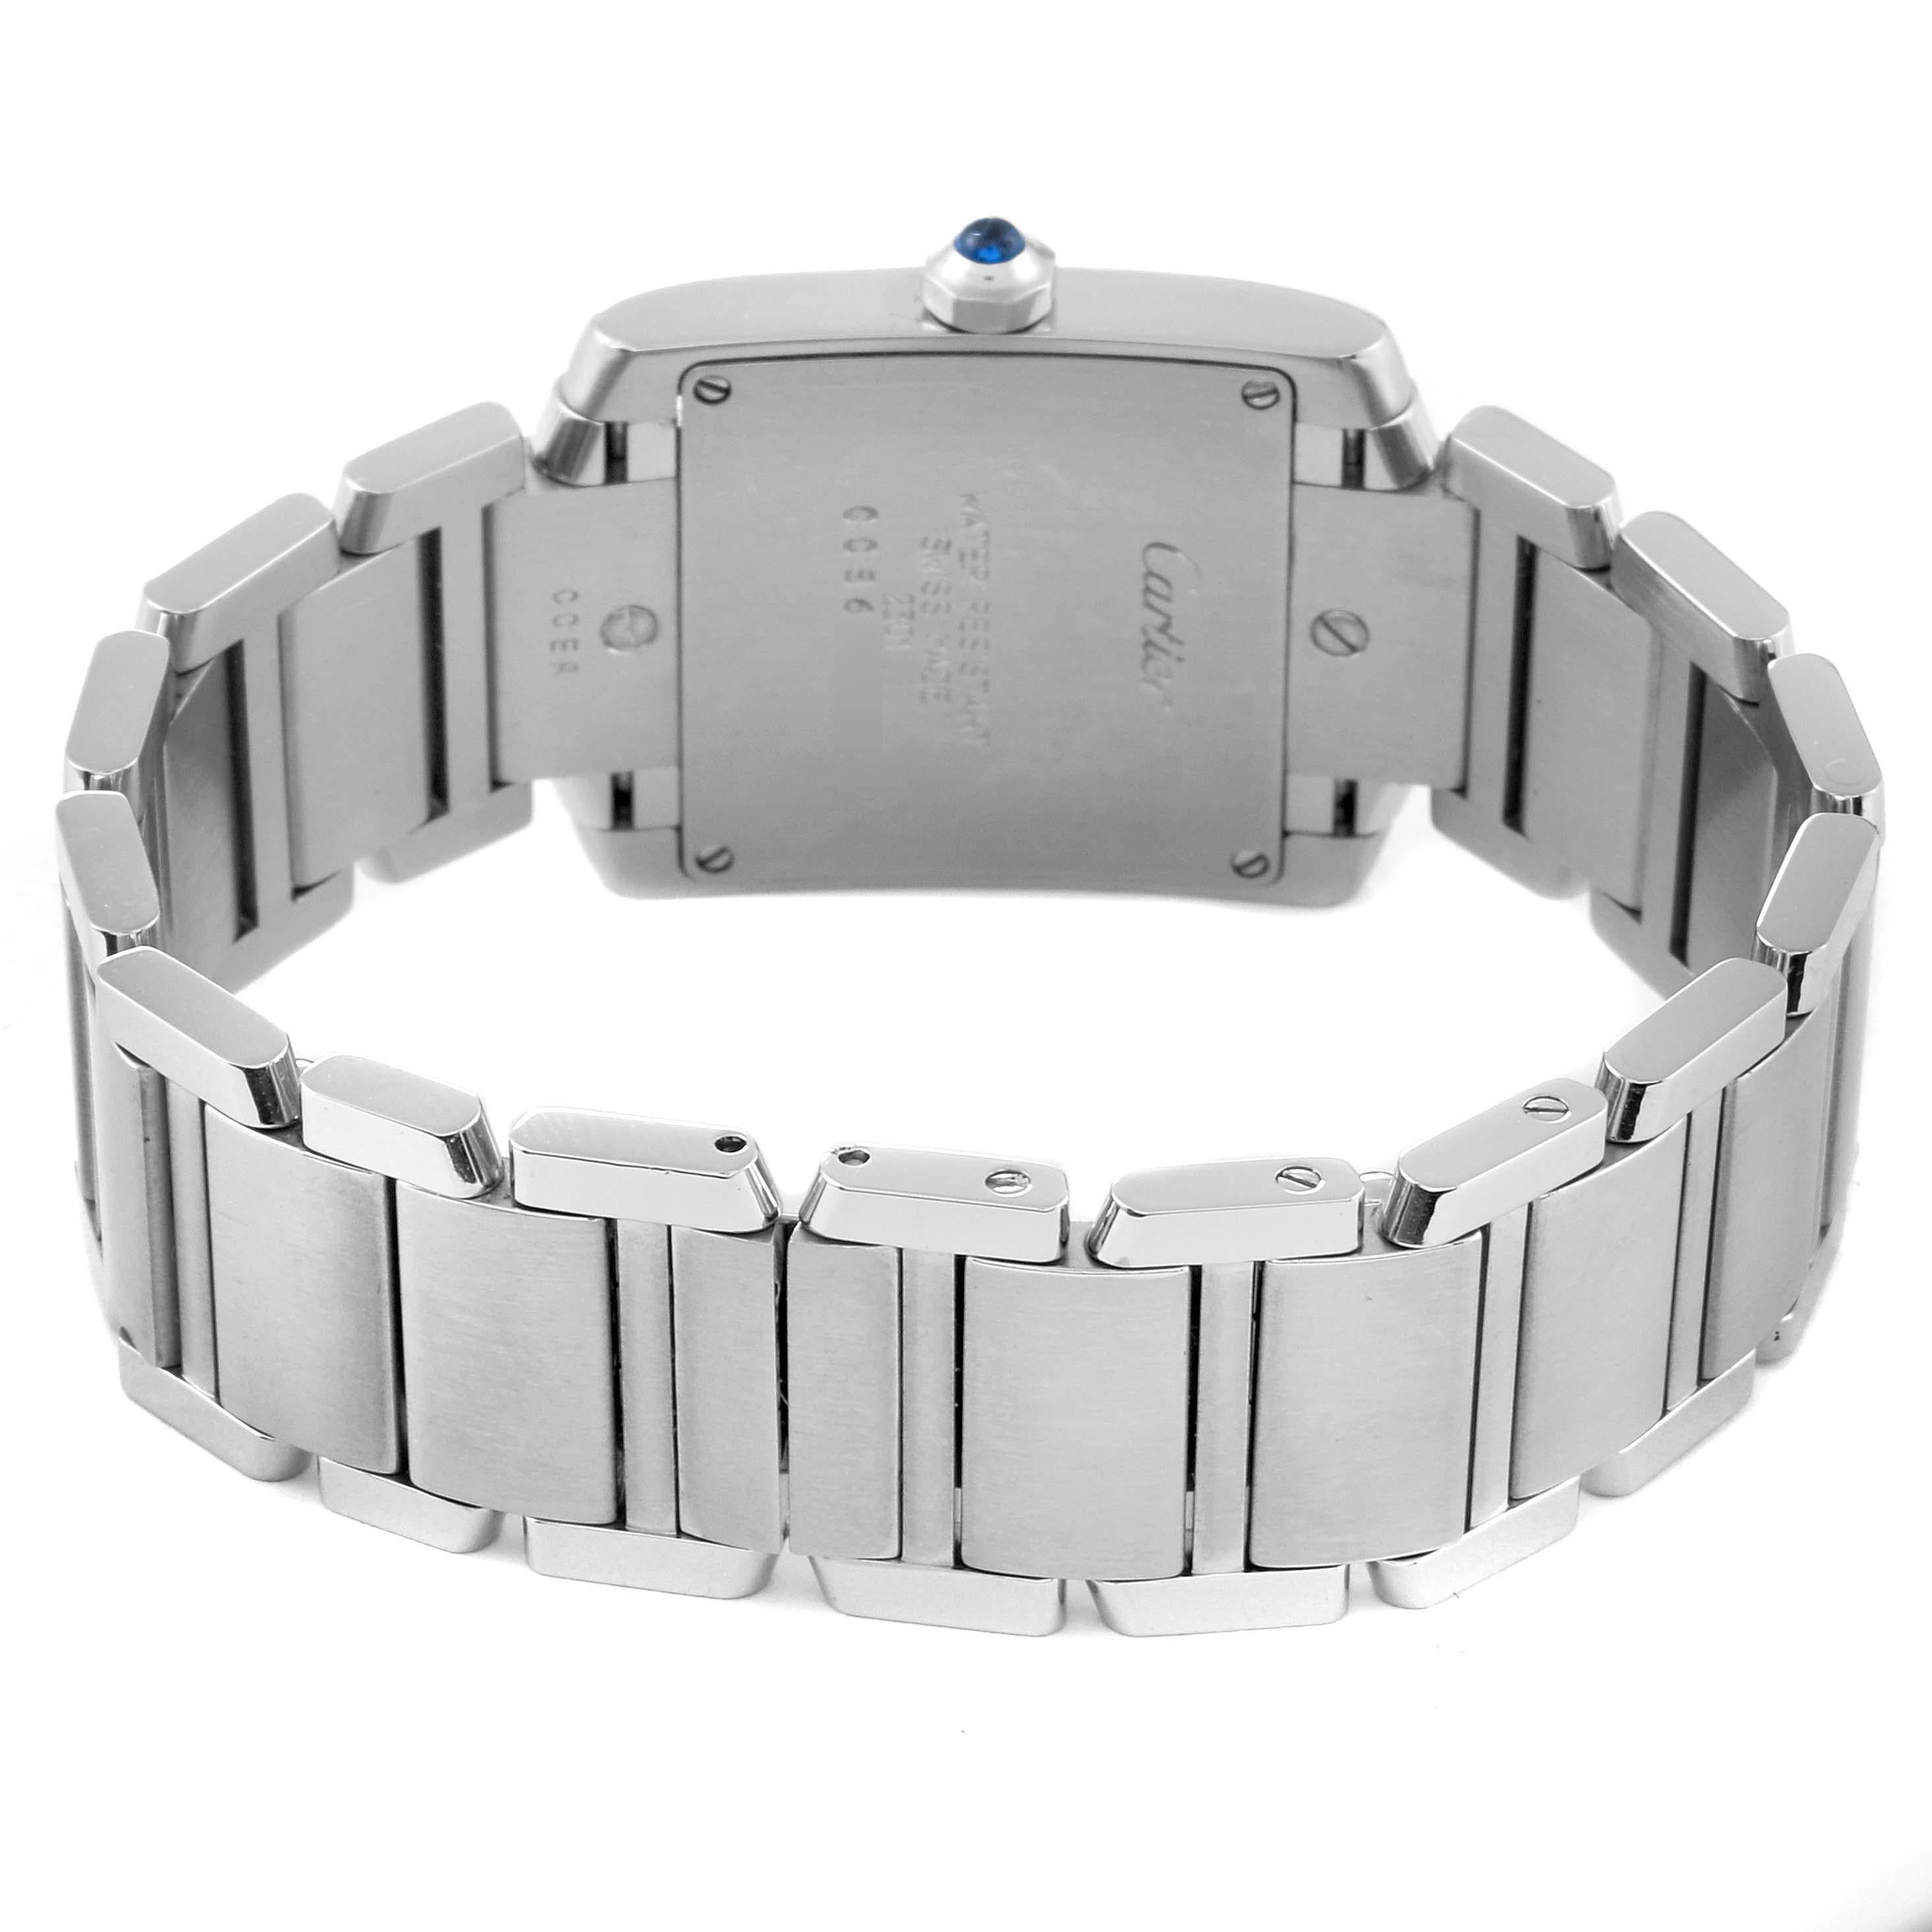 Cartier Tank Francaise Midsize Steel Ladies Watch WSTA0005 1